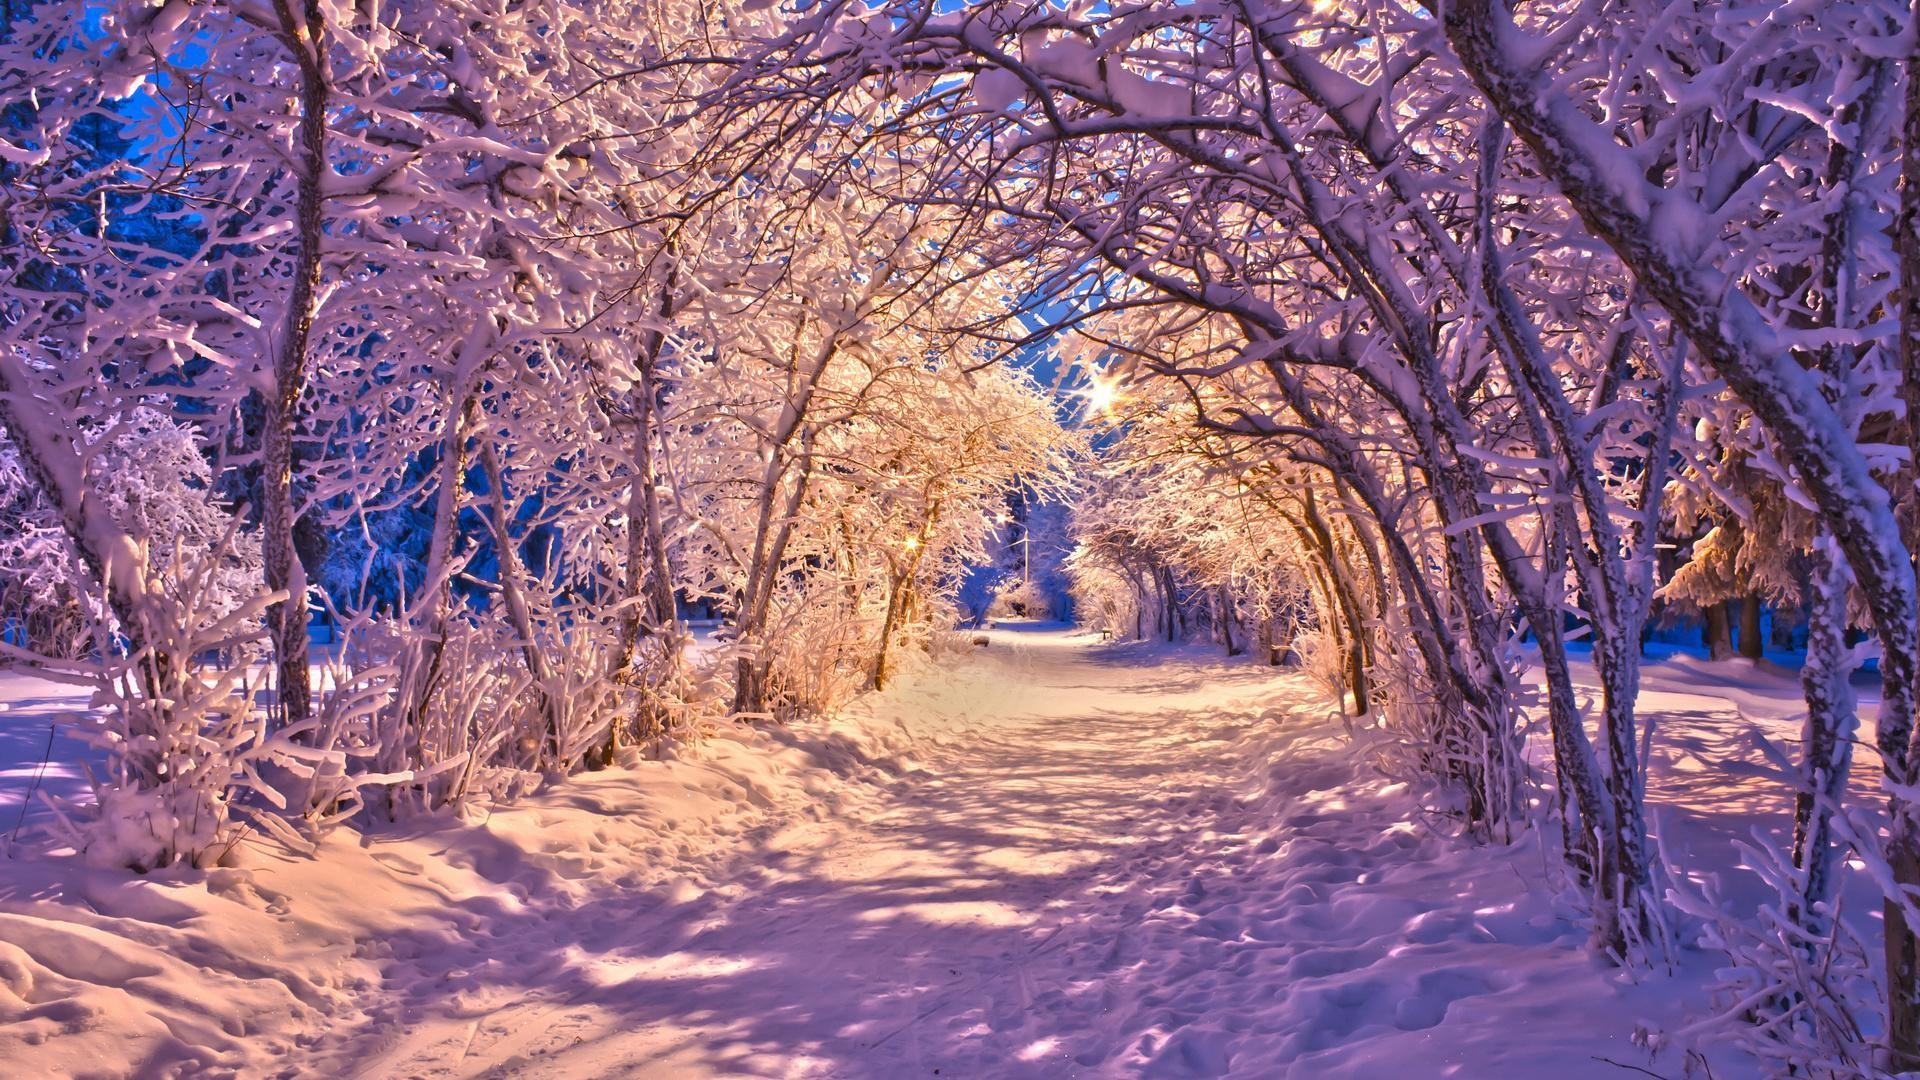 1920x1080 Nature Landscapes Winter Snow Christmas Sidewalk Roads Lights White Trees Desktop  Images